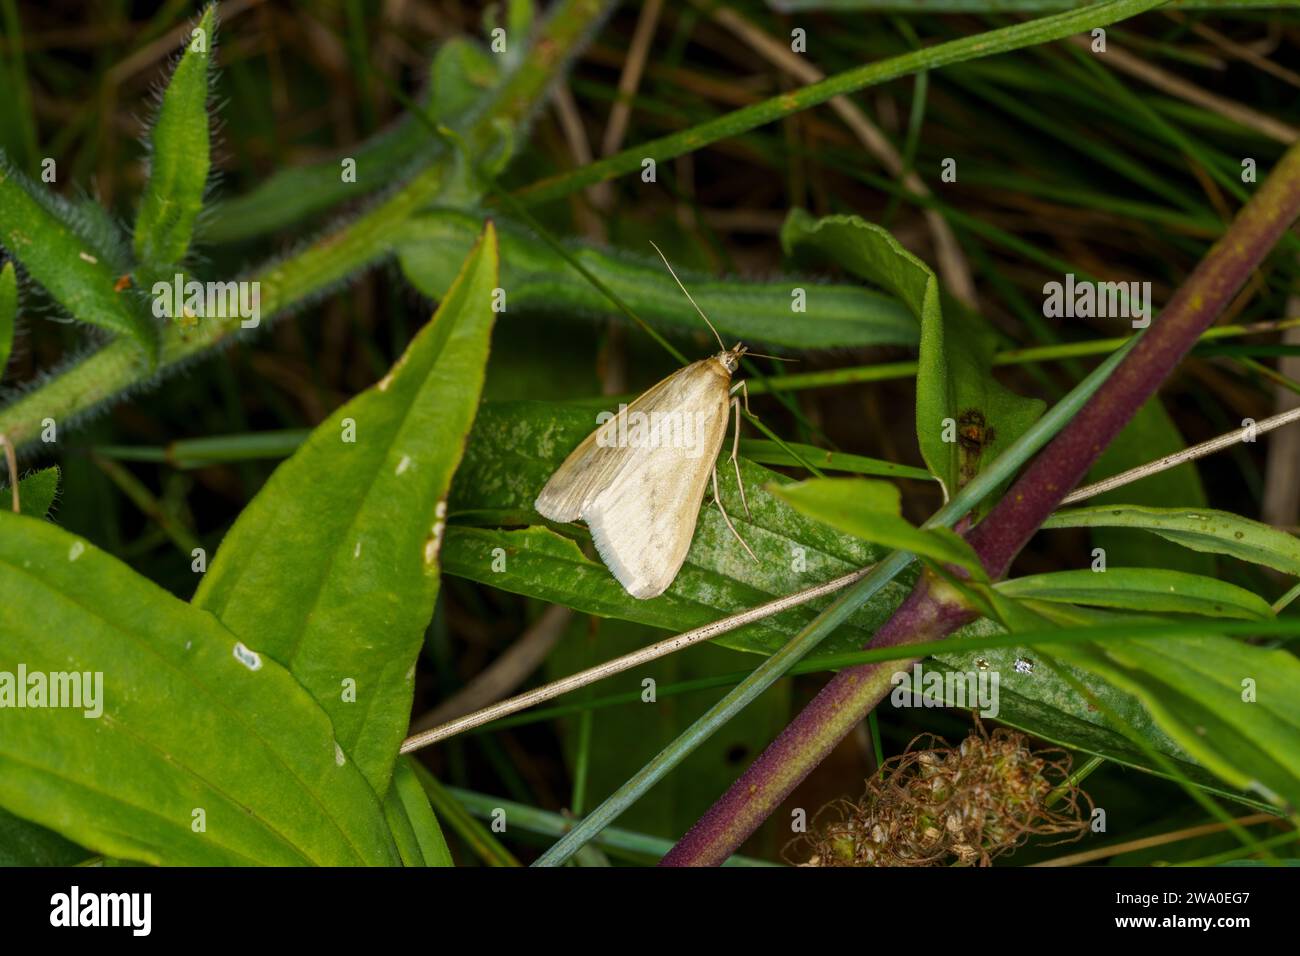 Loxostege turbidalis Family Crambidae Genus Loxostege moth wild nature insect wallpape, picture, photography Stock Photo